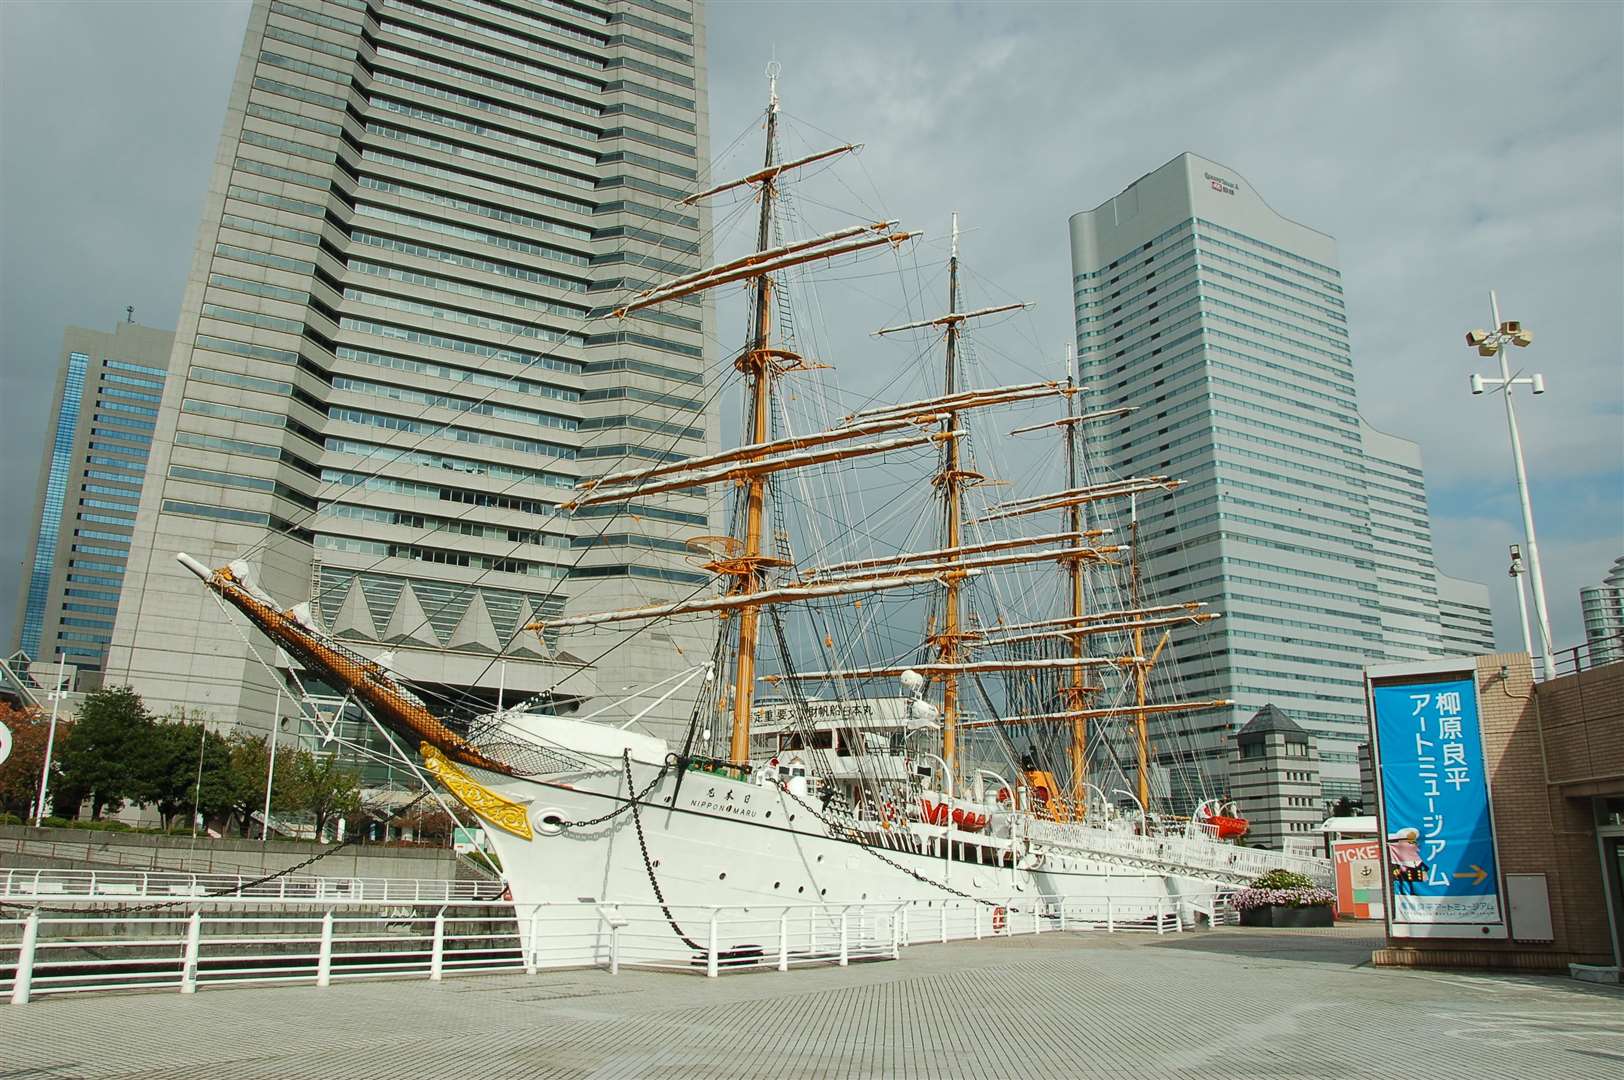 The Nippon Maru sail training ship at the Port Museum in Yokohama.